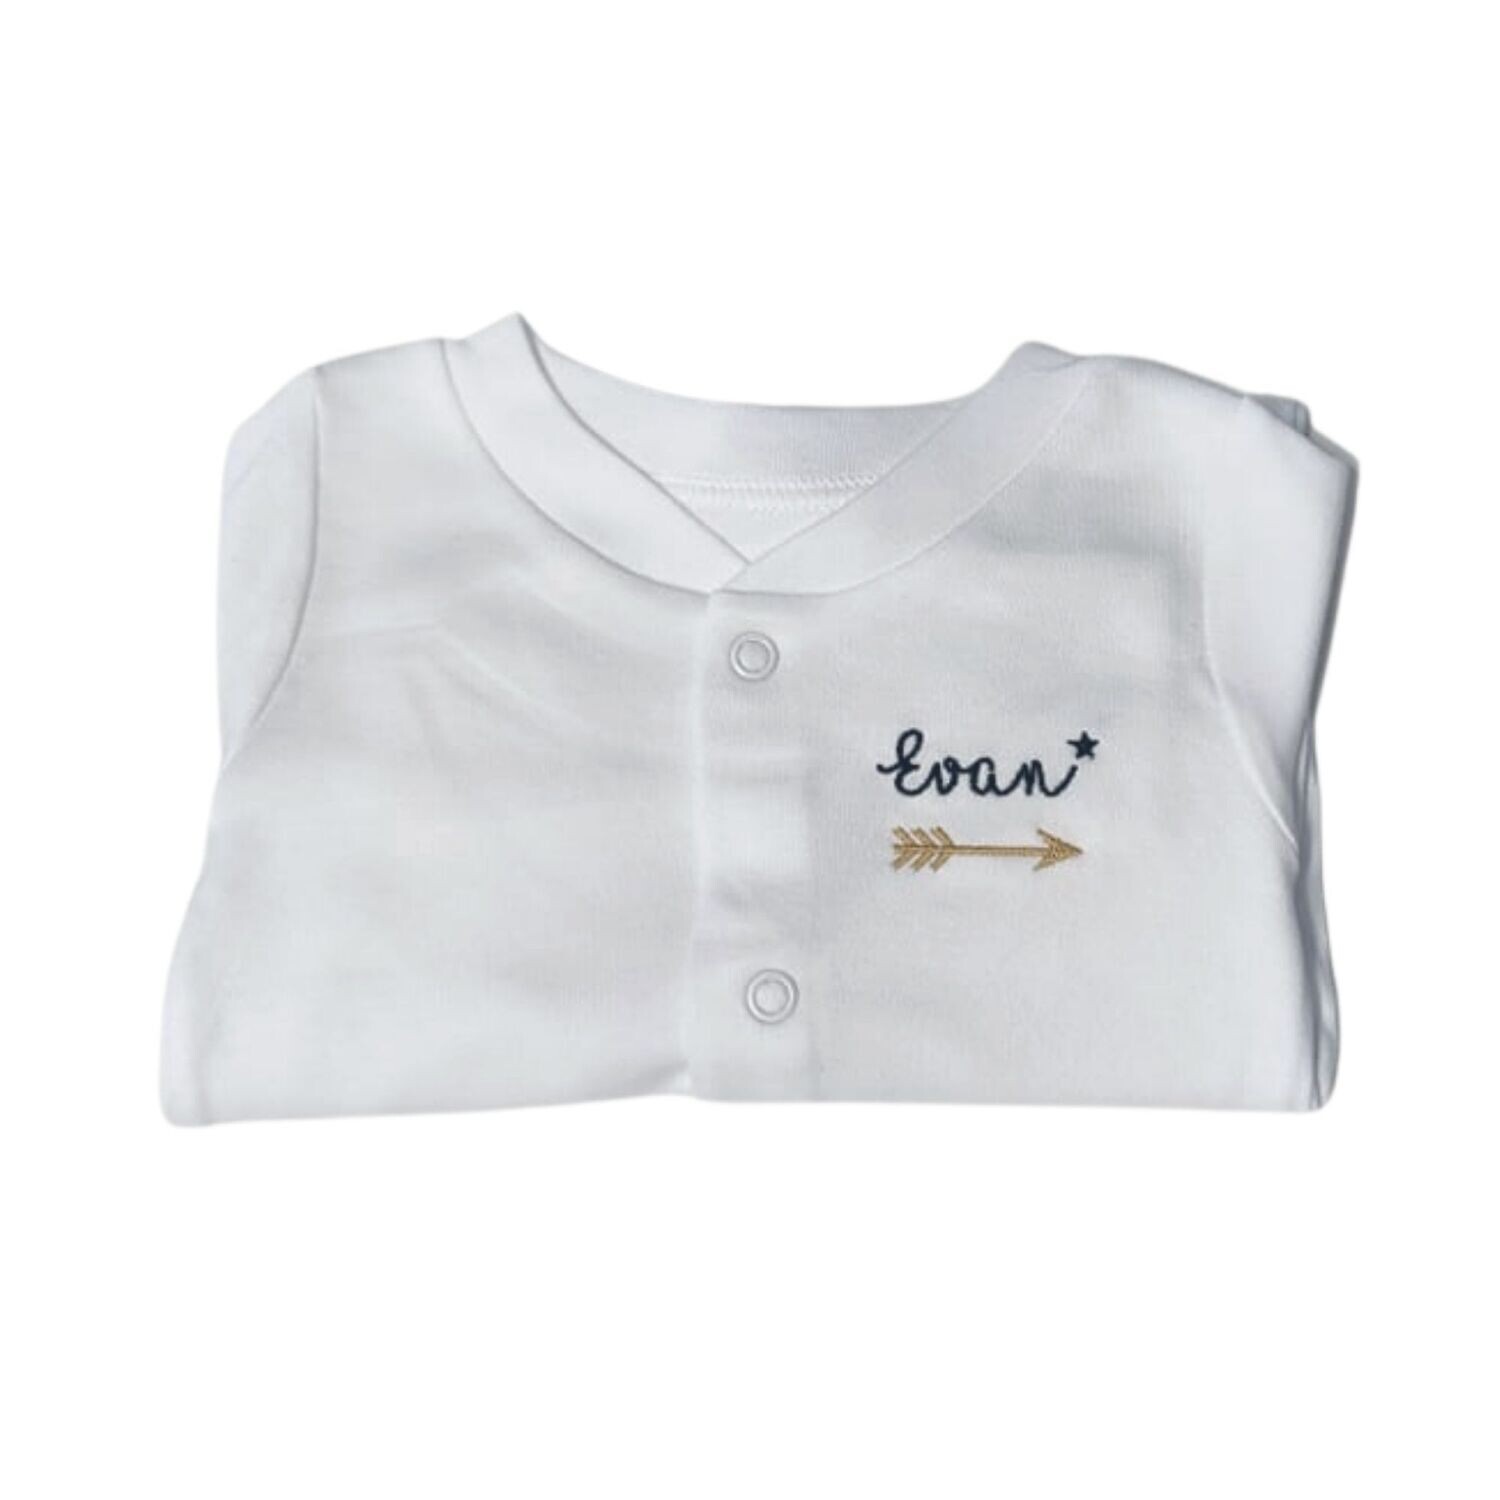 Personalised Baby Name Sleepsuit with Arrow